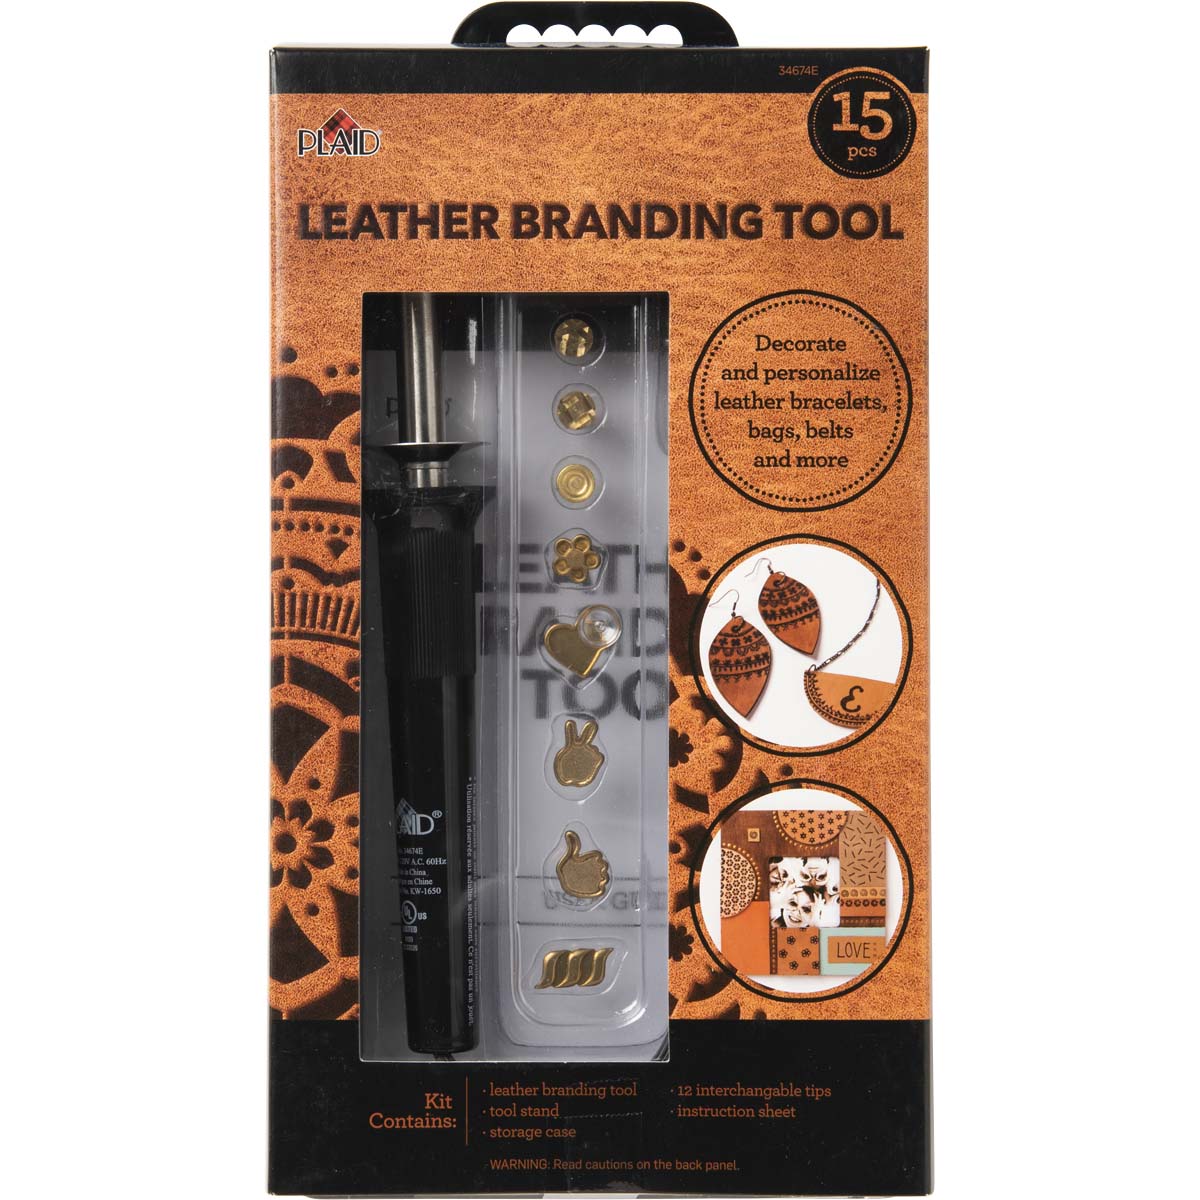 Plaid ® Leather Branding Tool, 15 pc. - 34674E